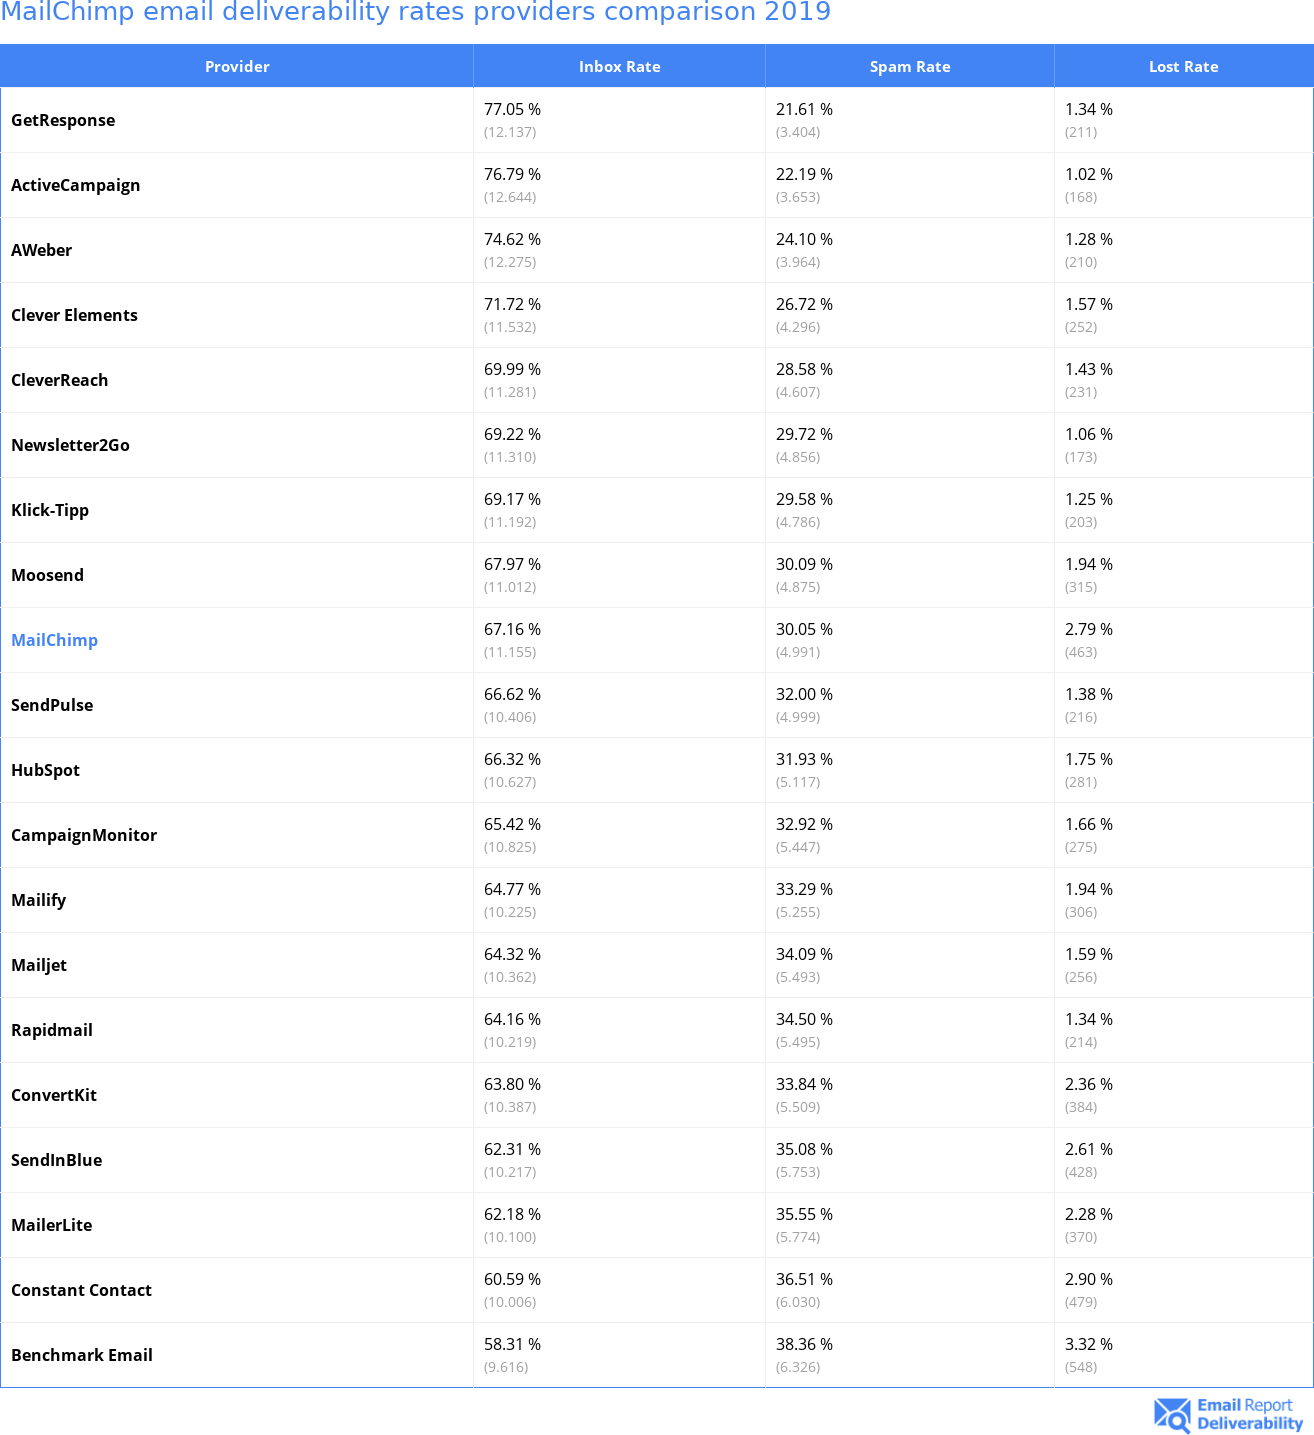 MailChimp email deliverability rates providers comparison 2019